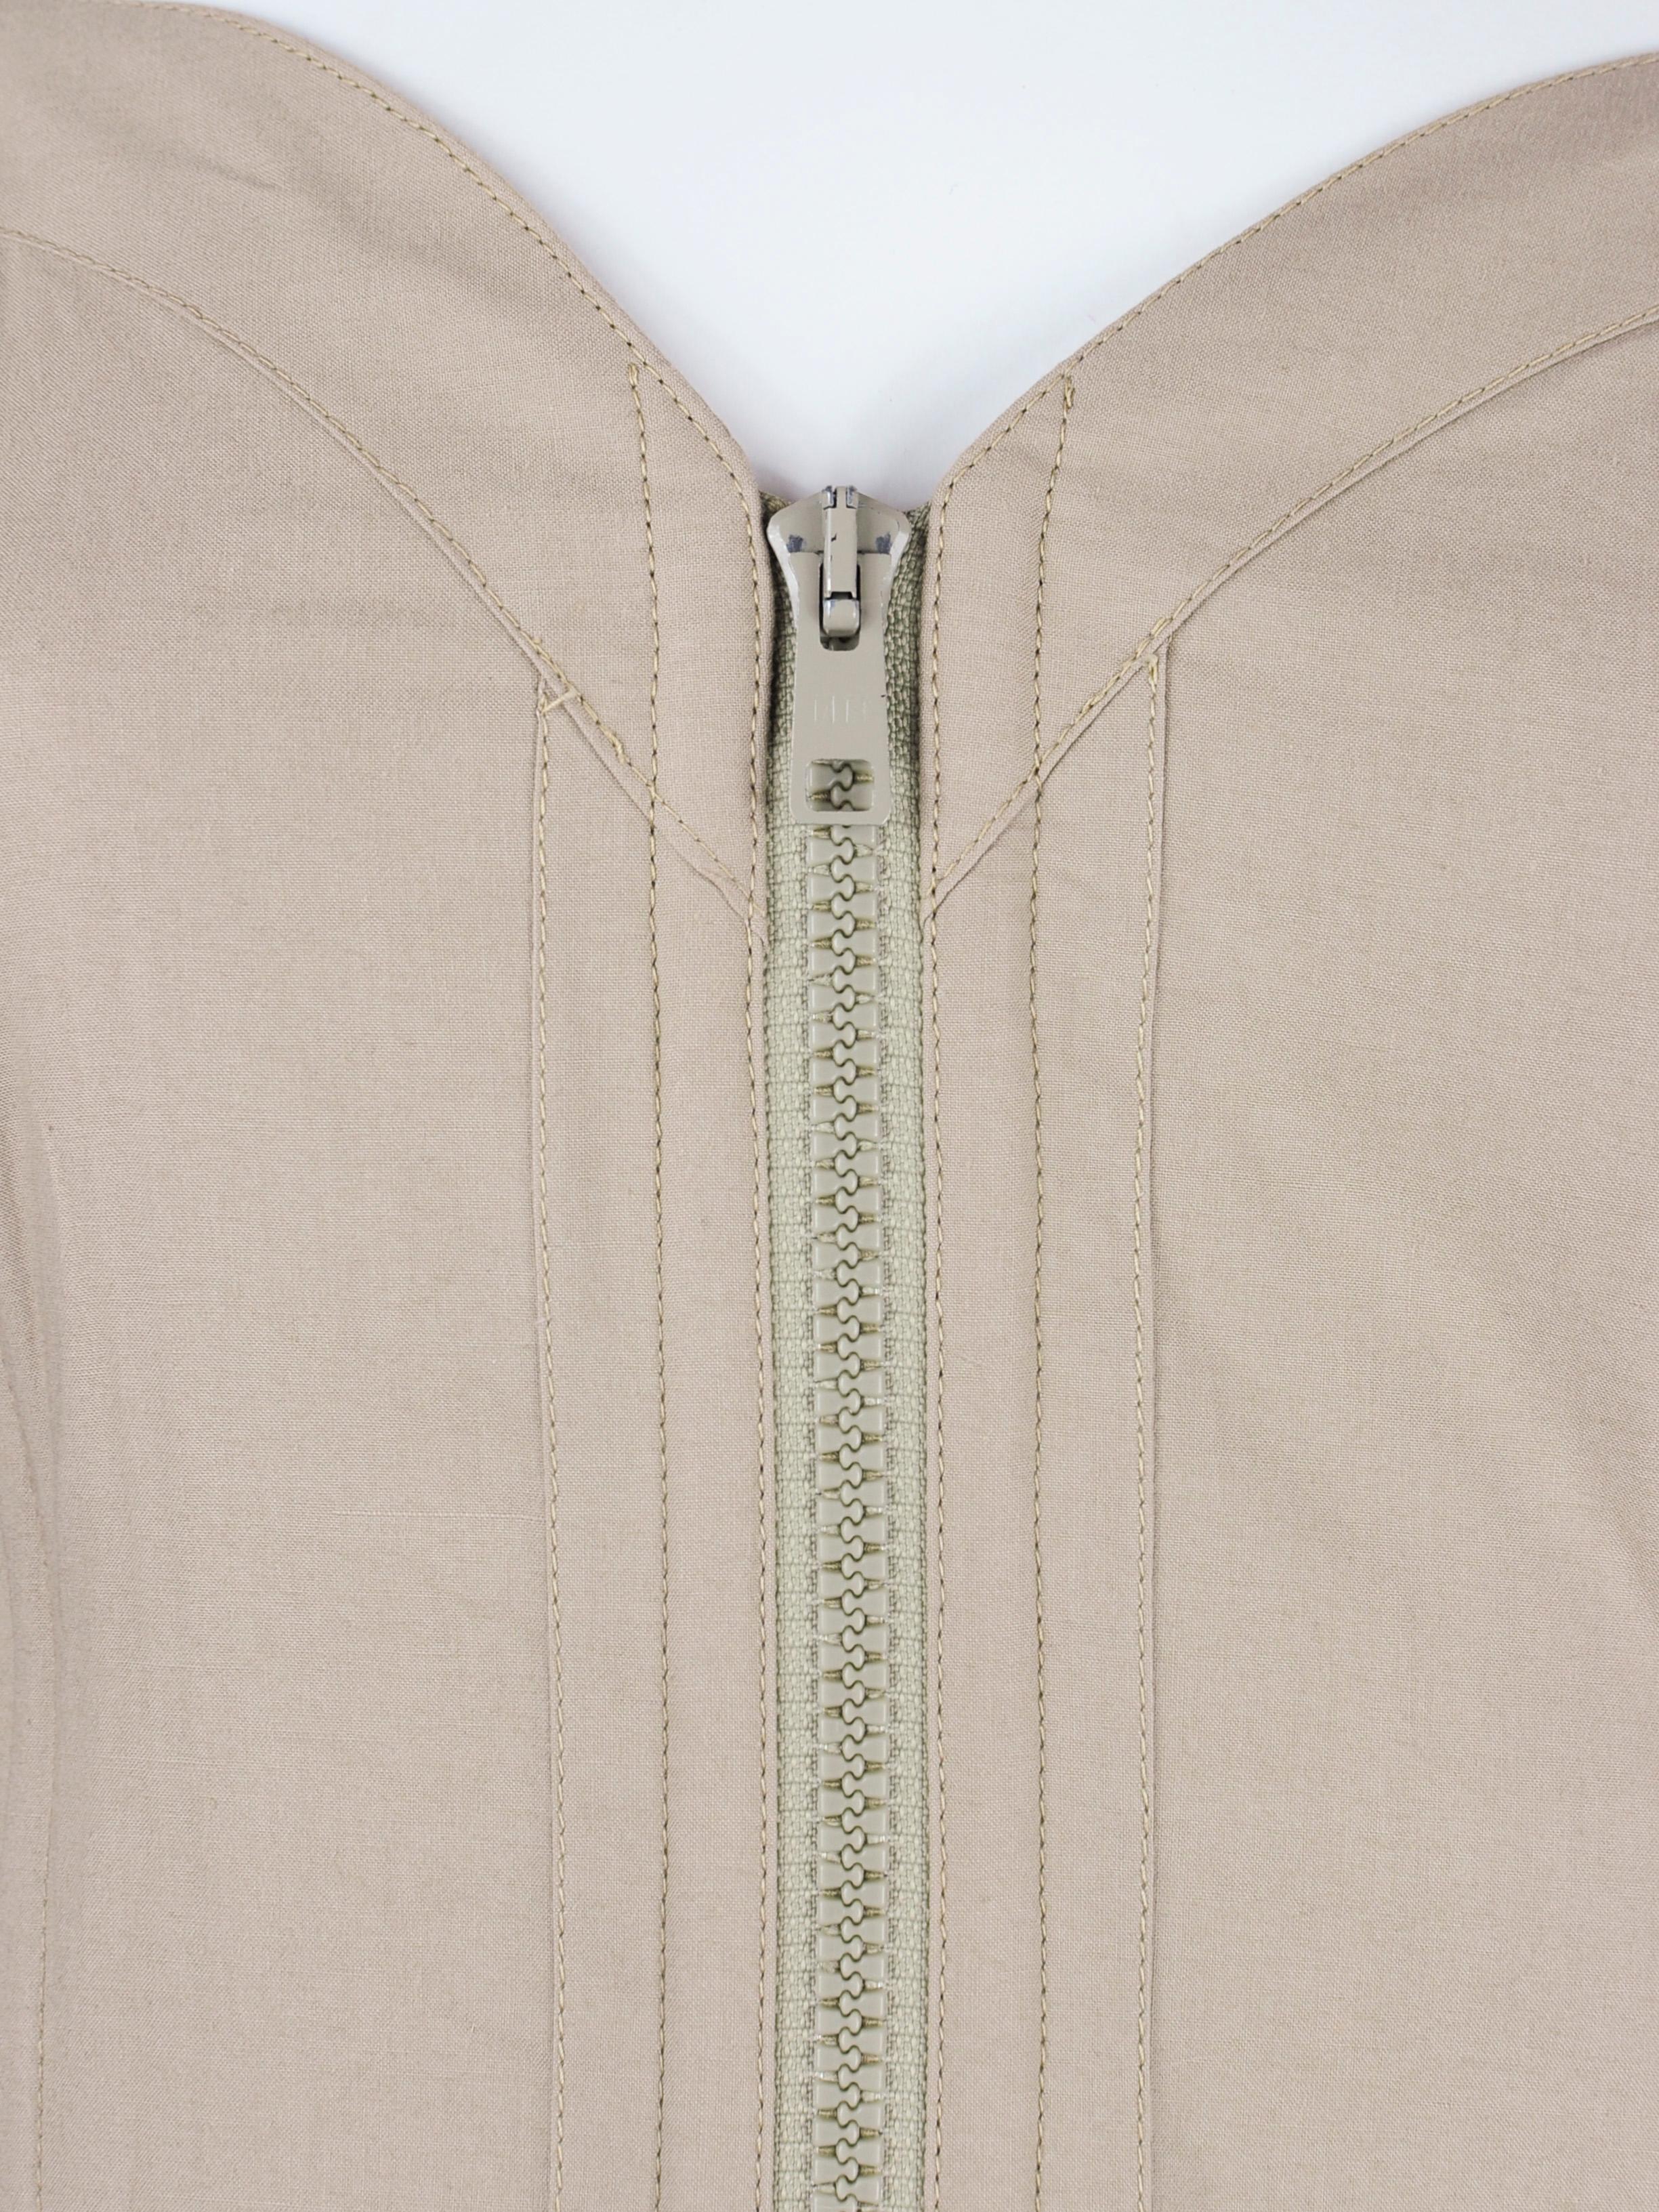 La Perla Corset NWT Deadstock Beige Cotton Zipper Peplum Shape 1990s For Sale 3